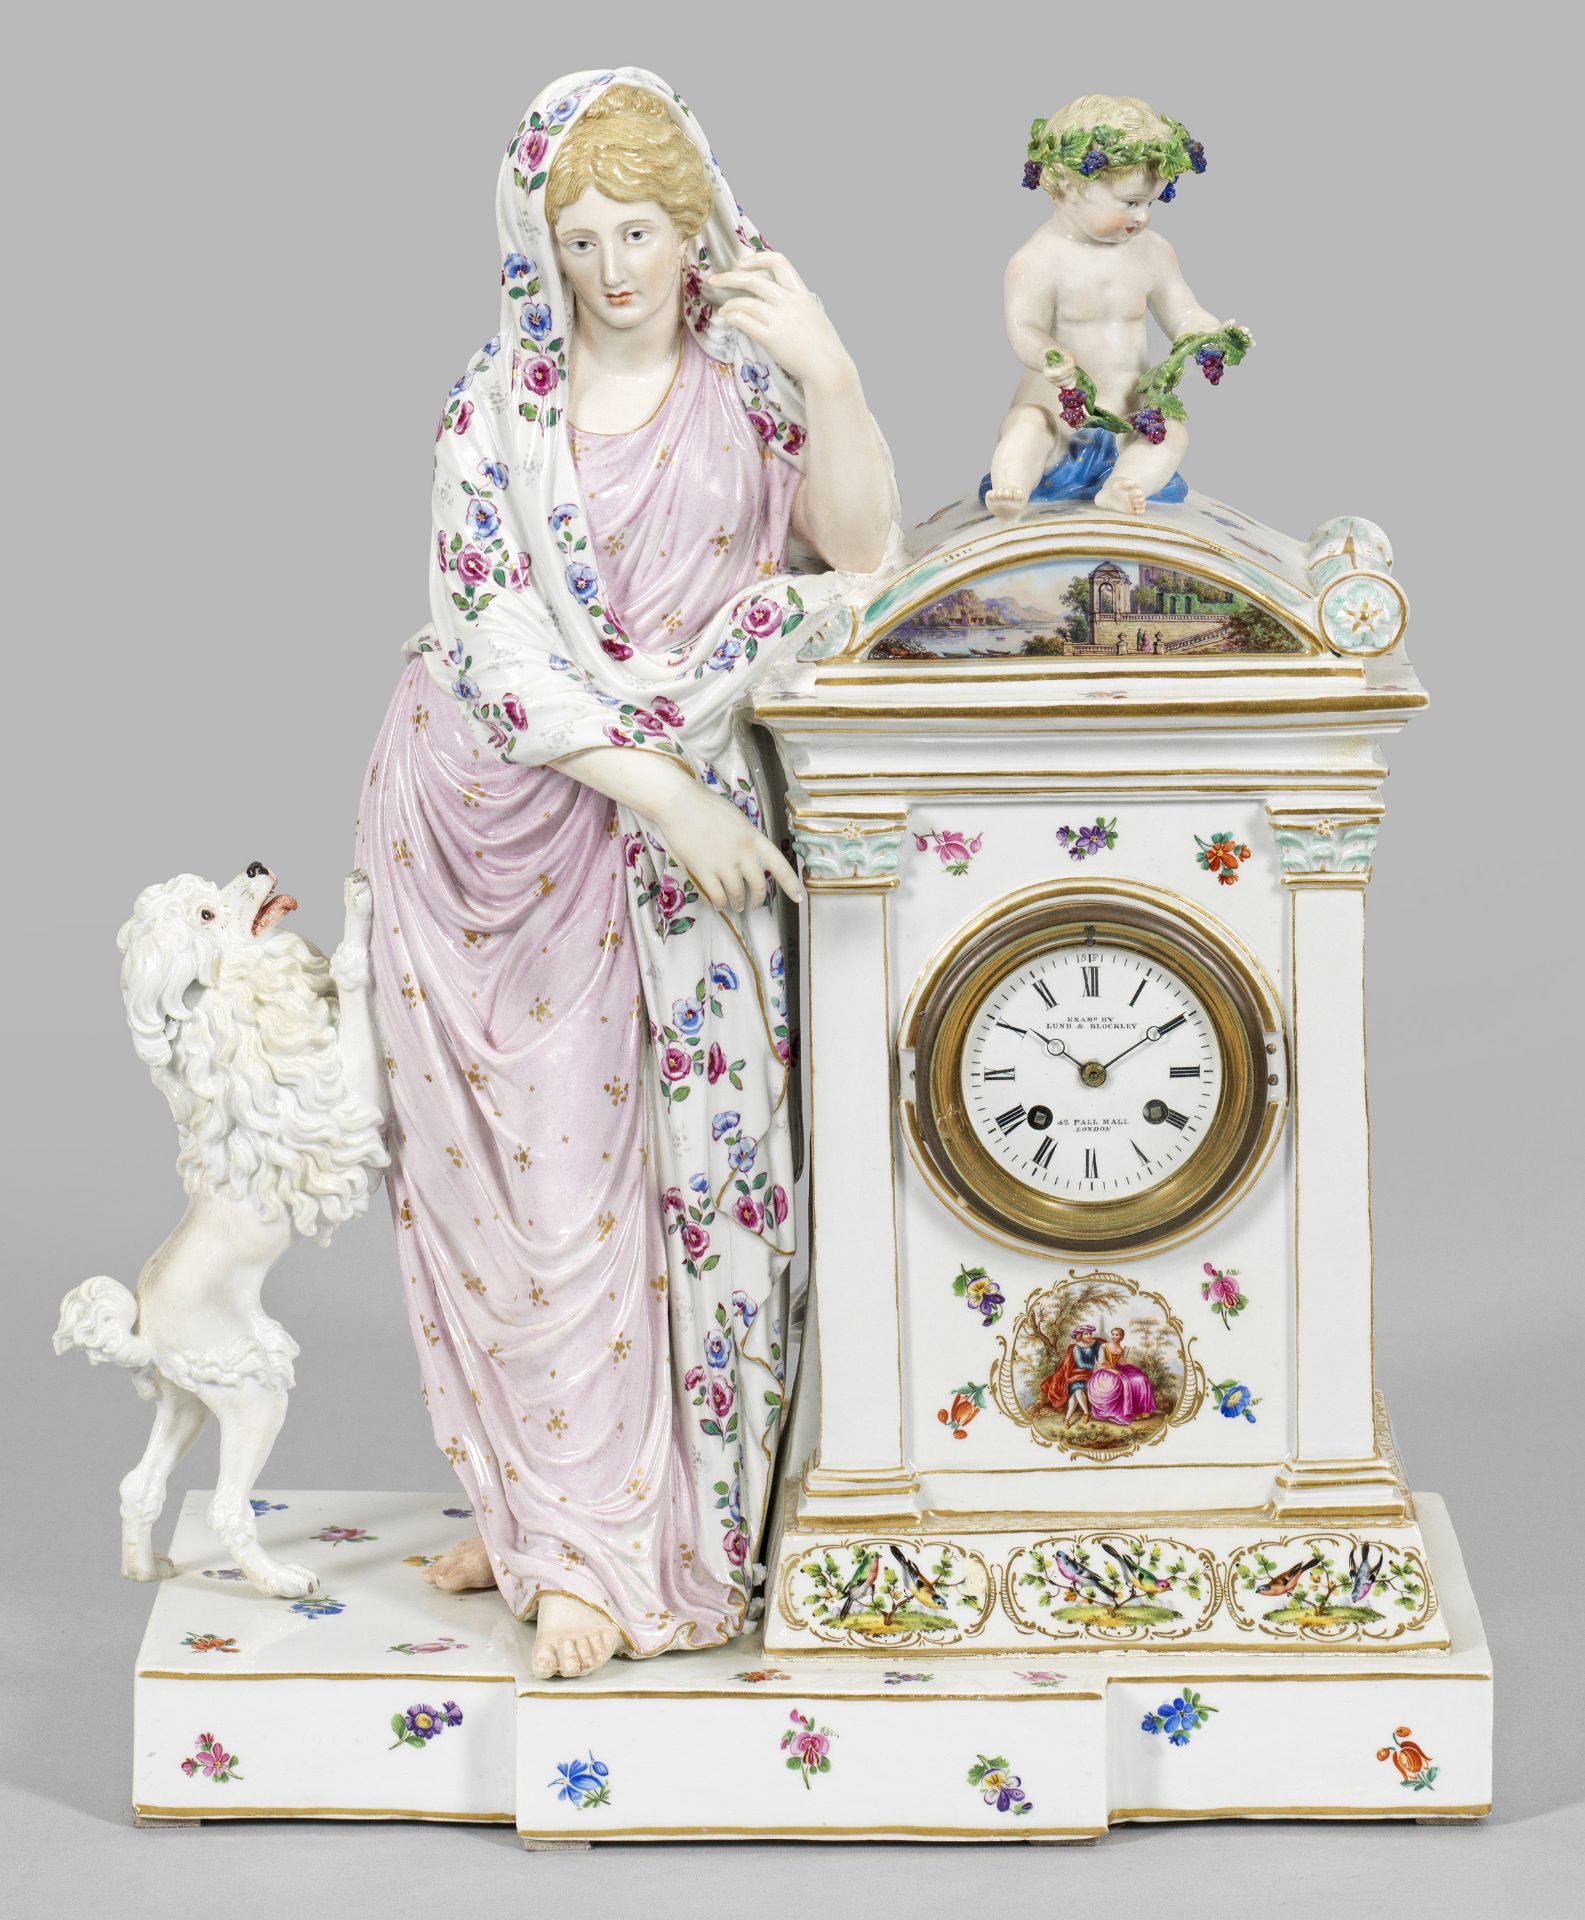 Klassizistische Figurenpendule mit Dame und Pudel